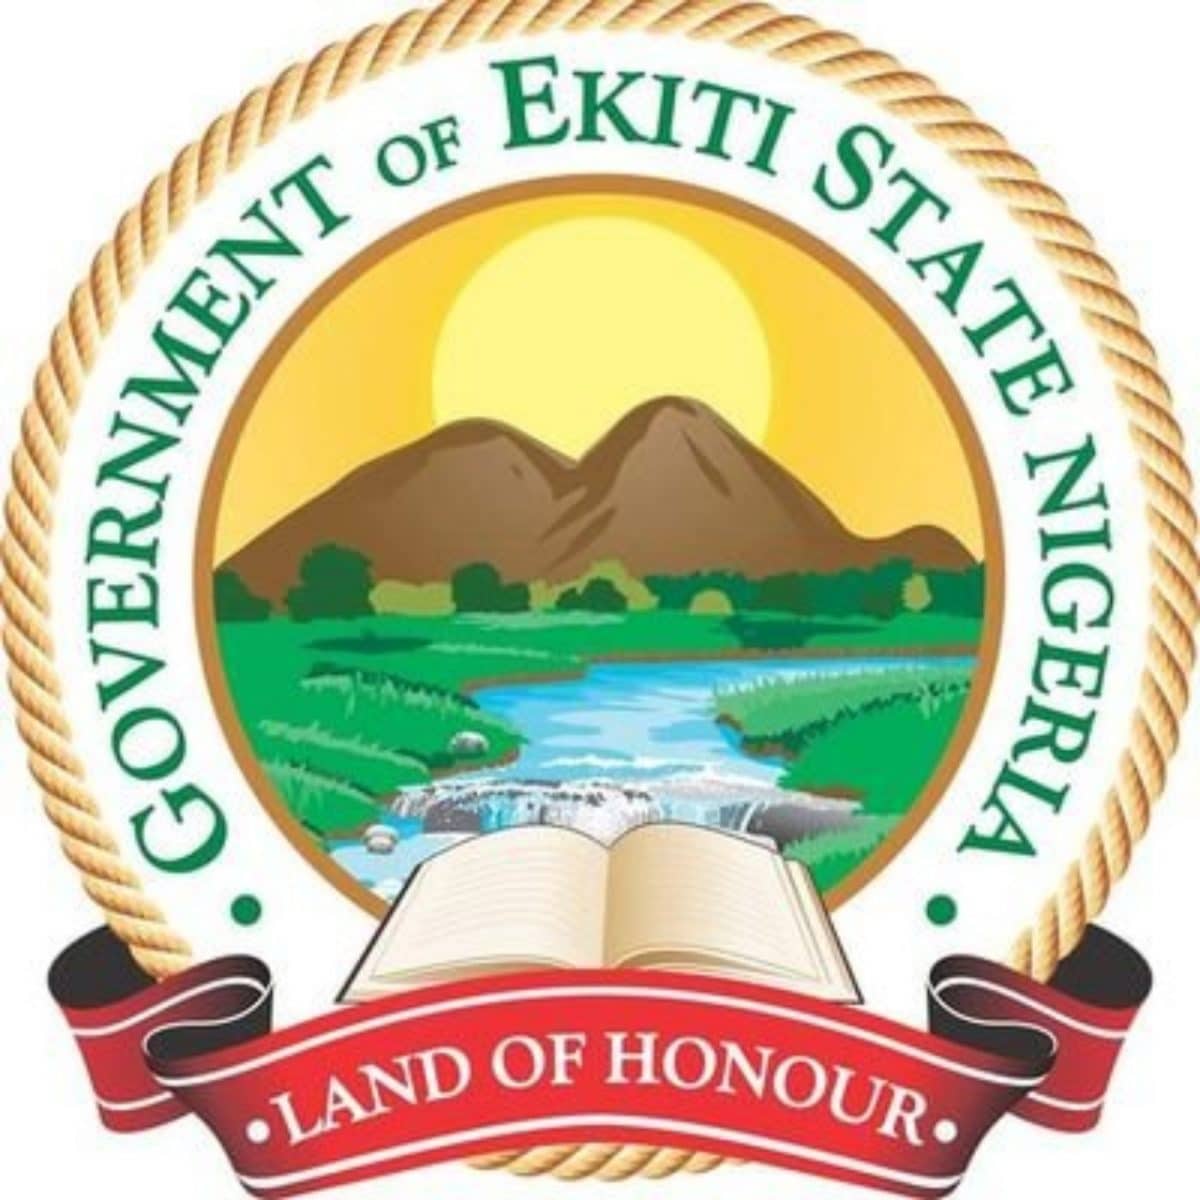 nigeria news ekiti govt warns two communities against conducting economic activities on disputed land